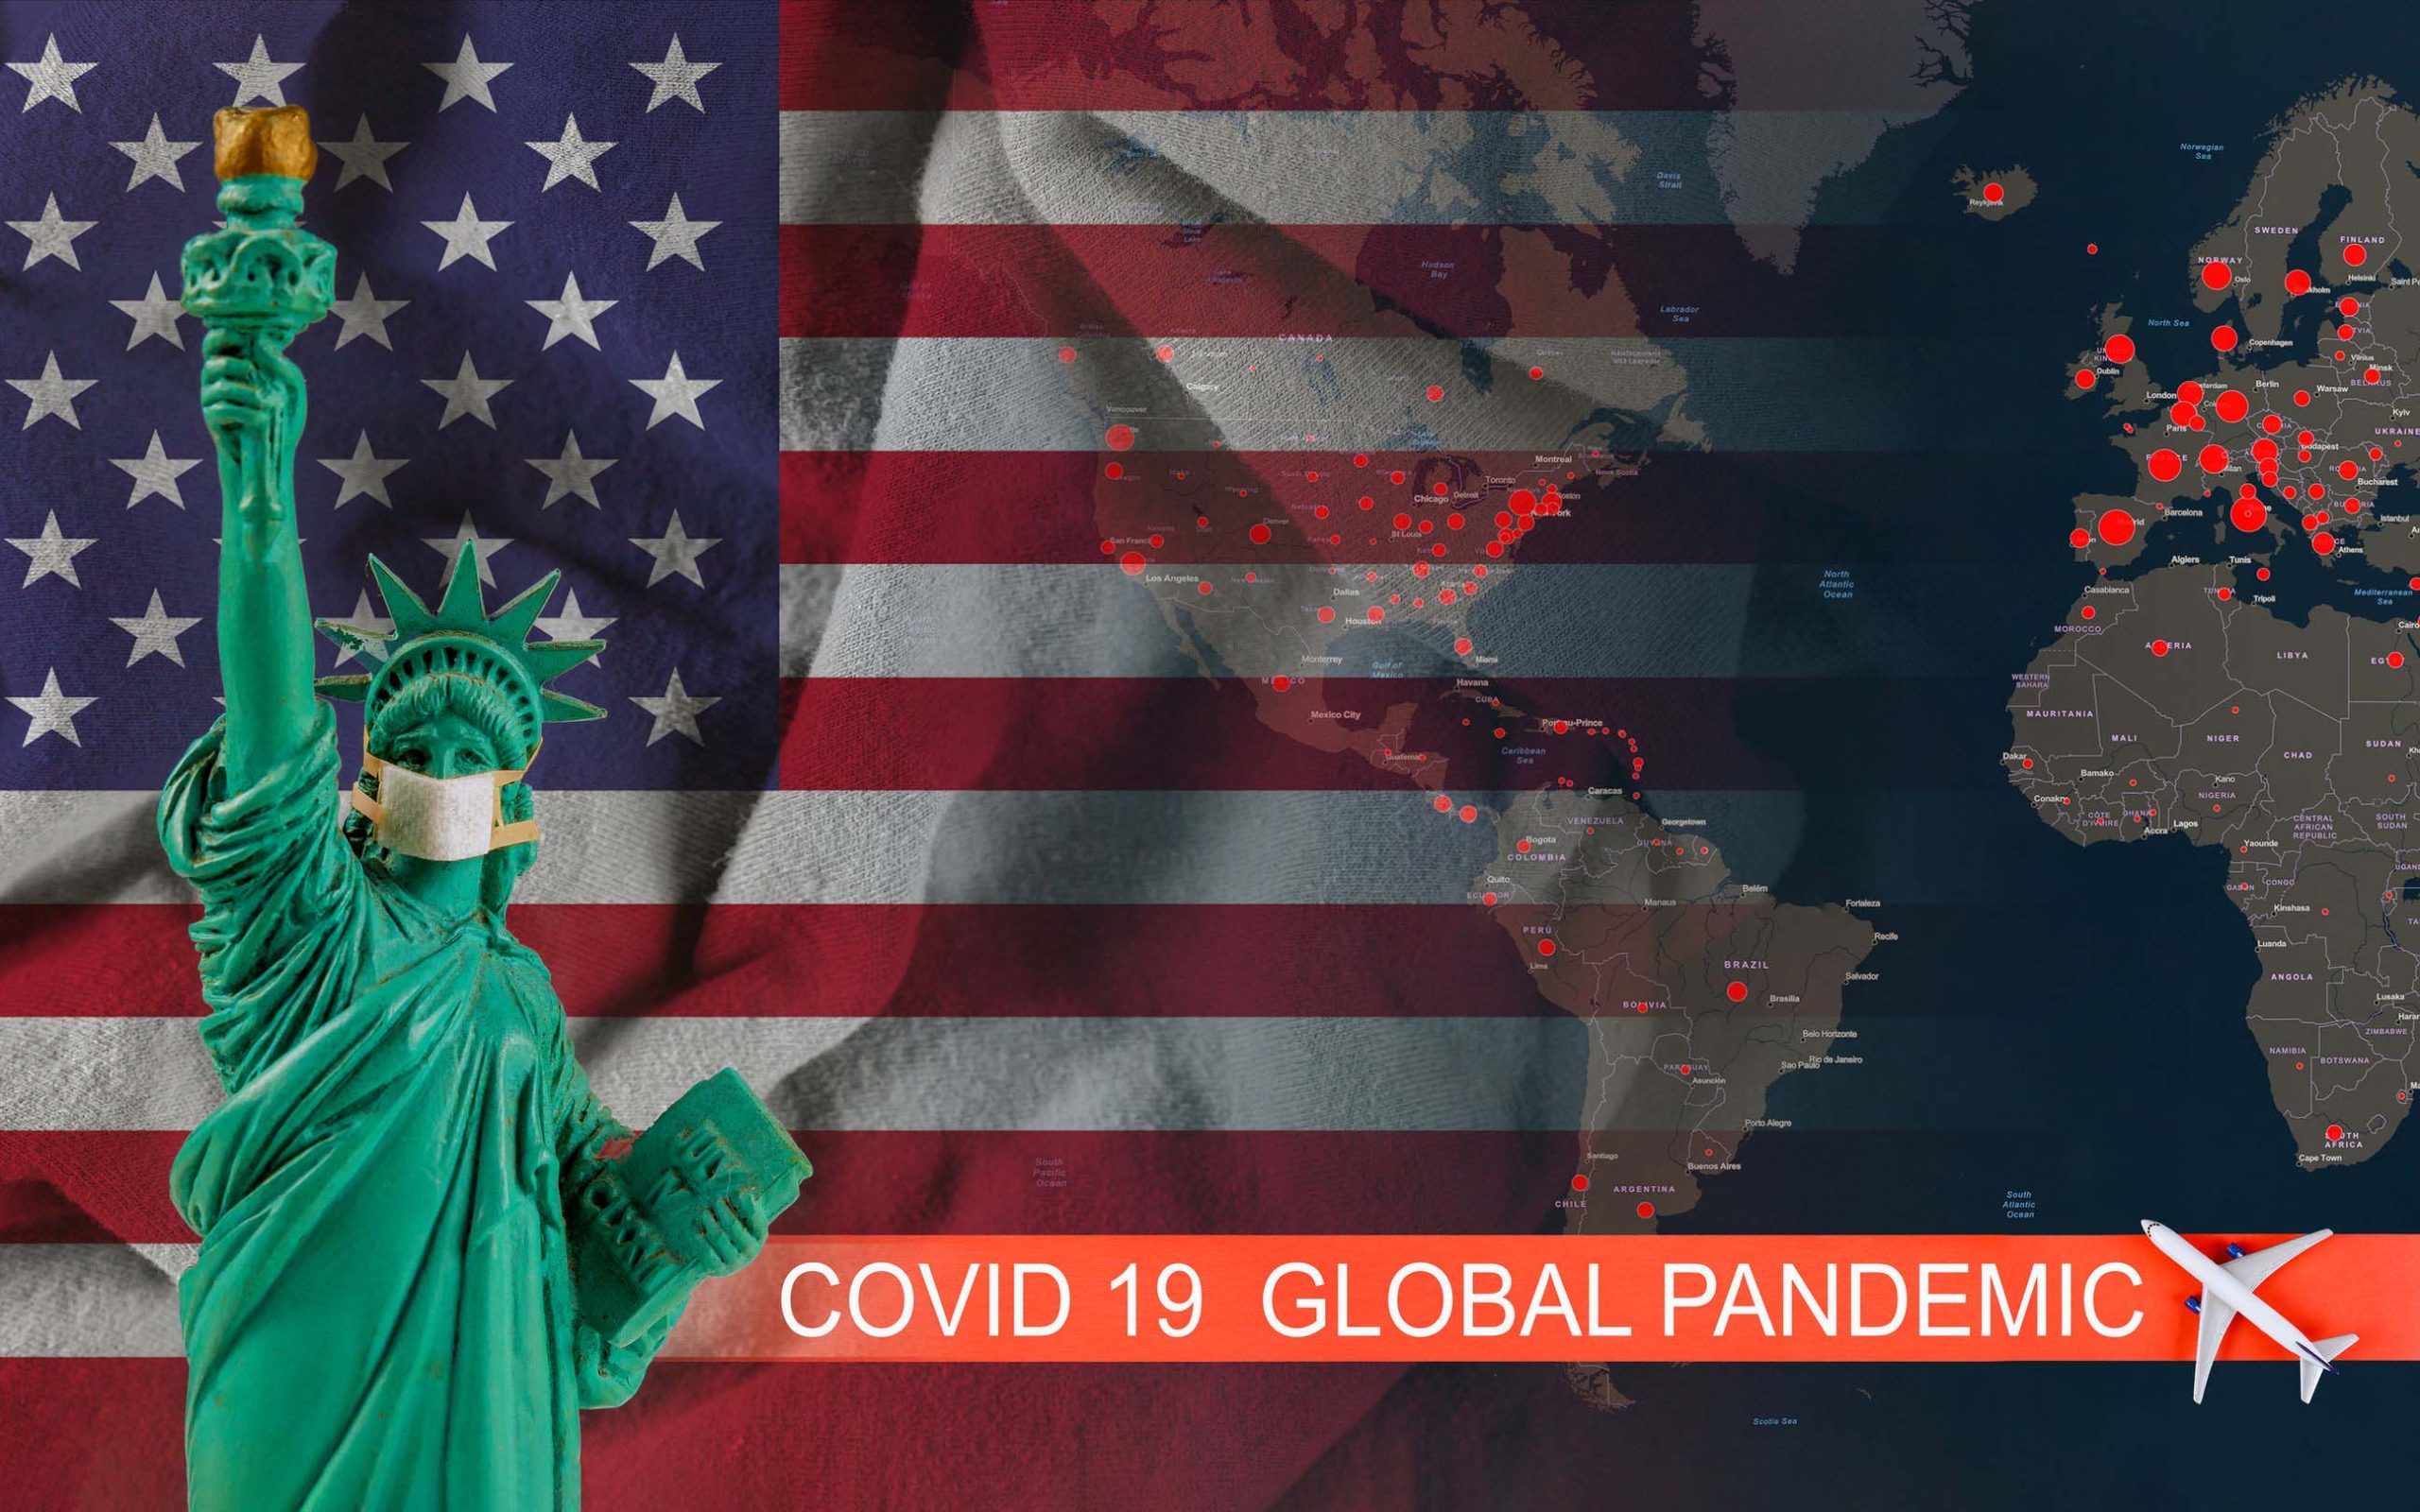 Banned travel quarantine global pandemic corona virus COVID-19 Coronavirus